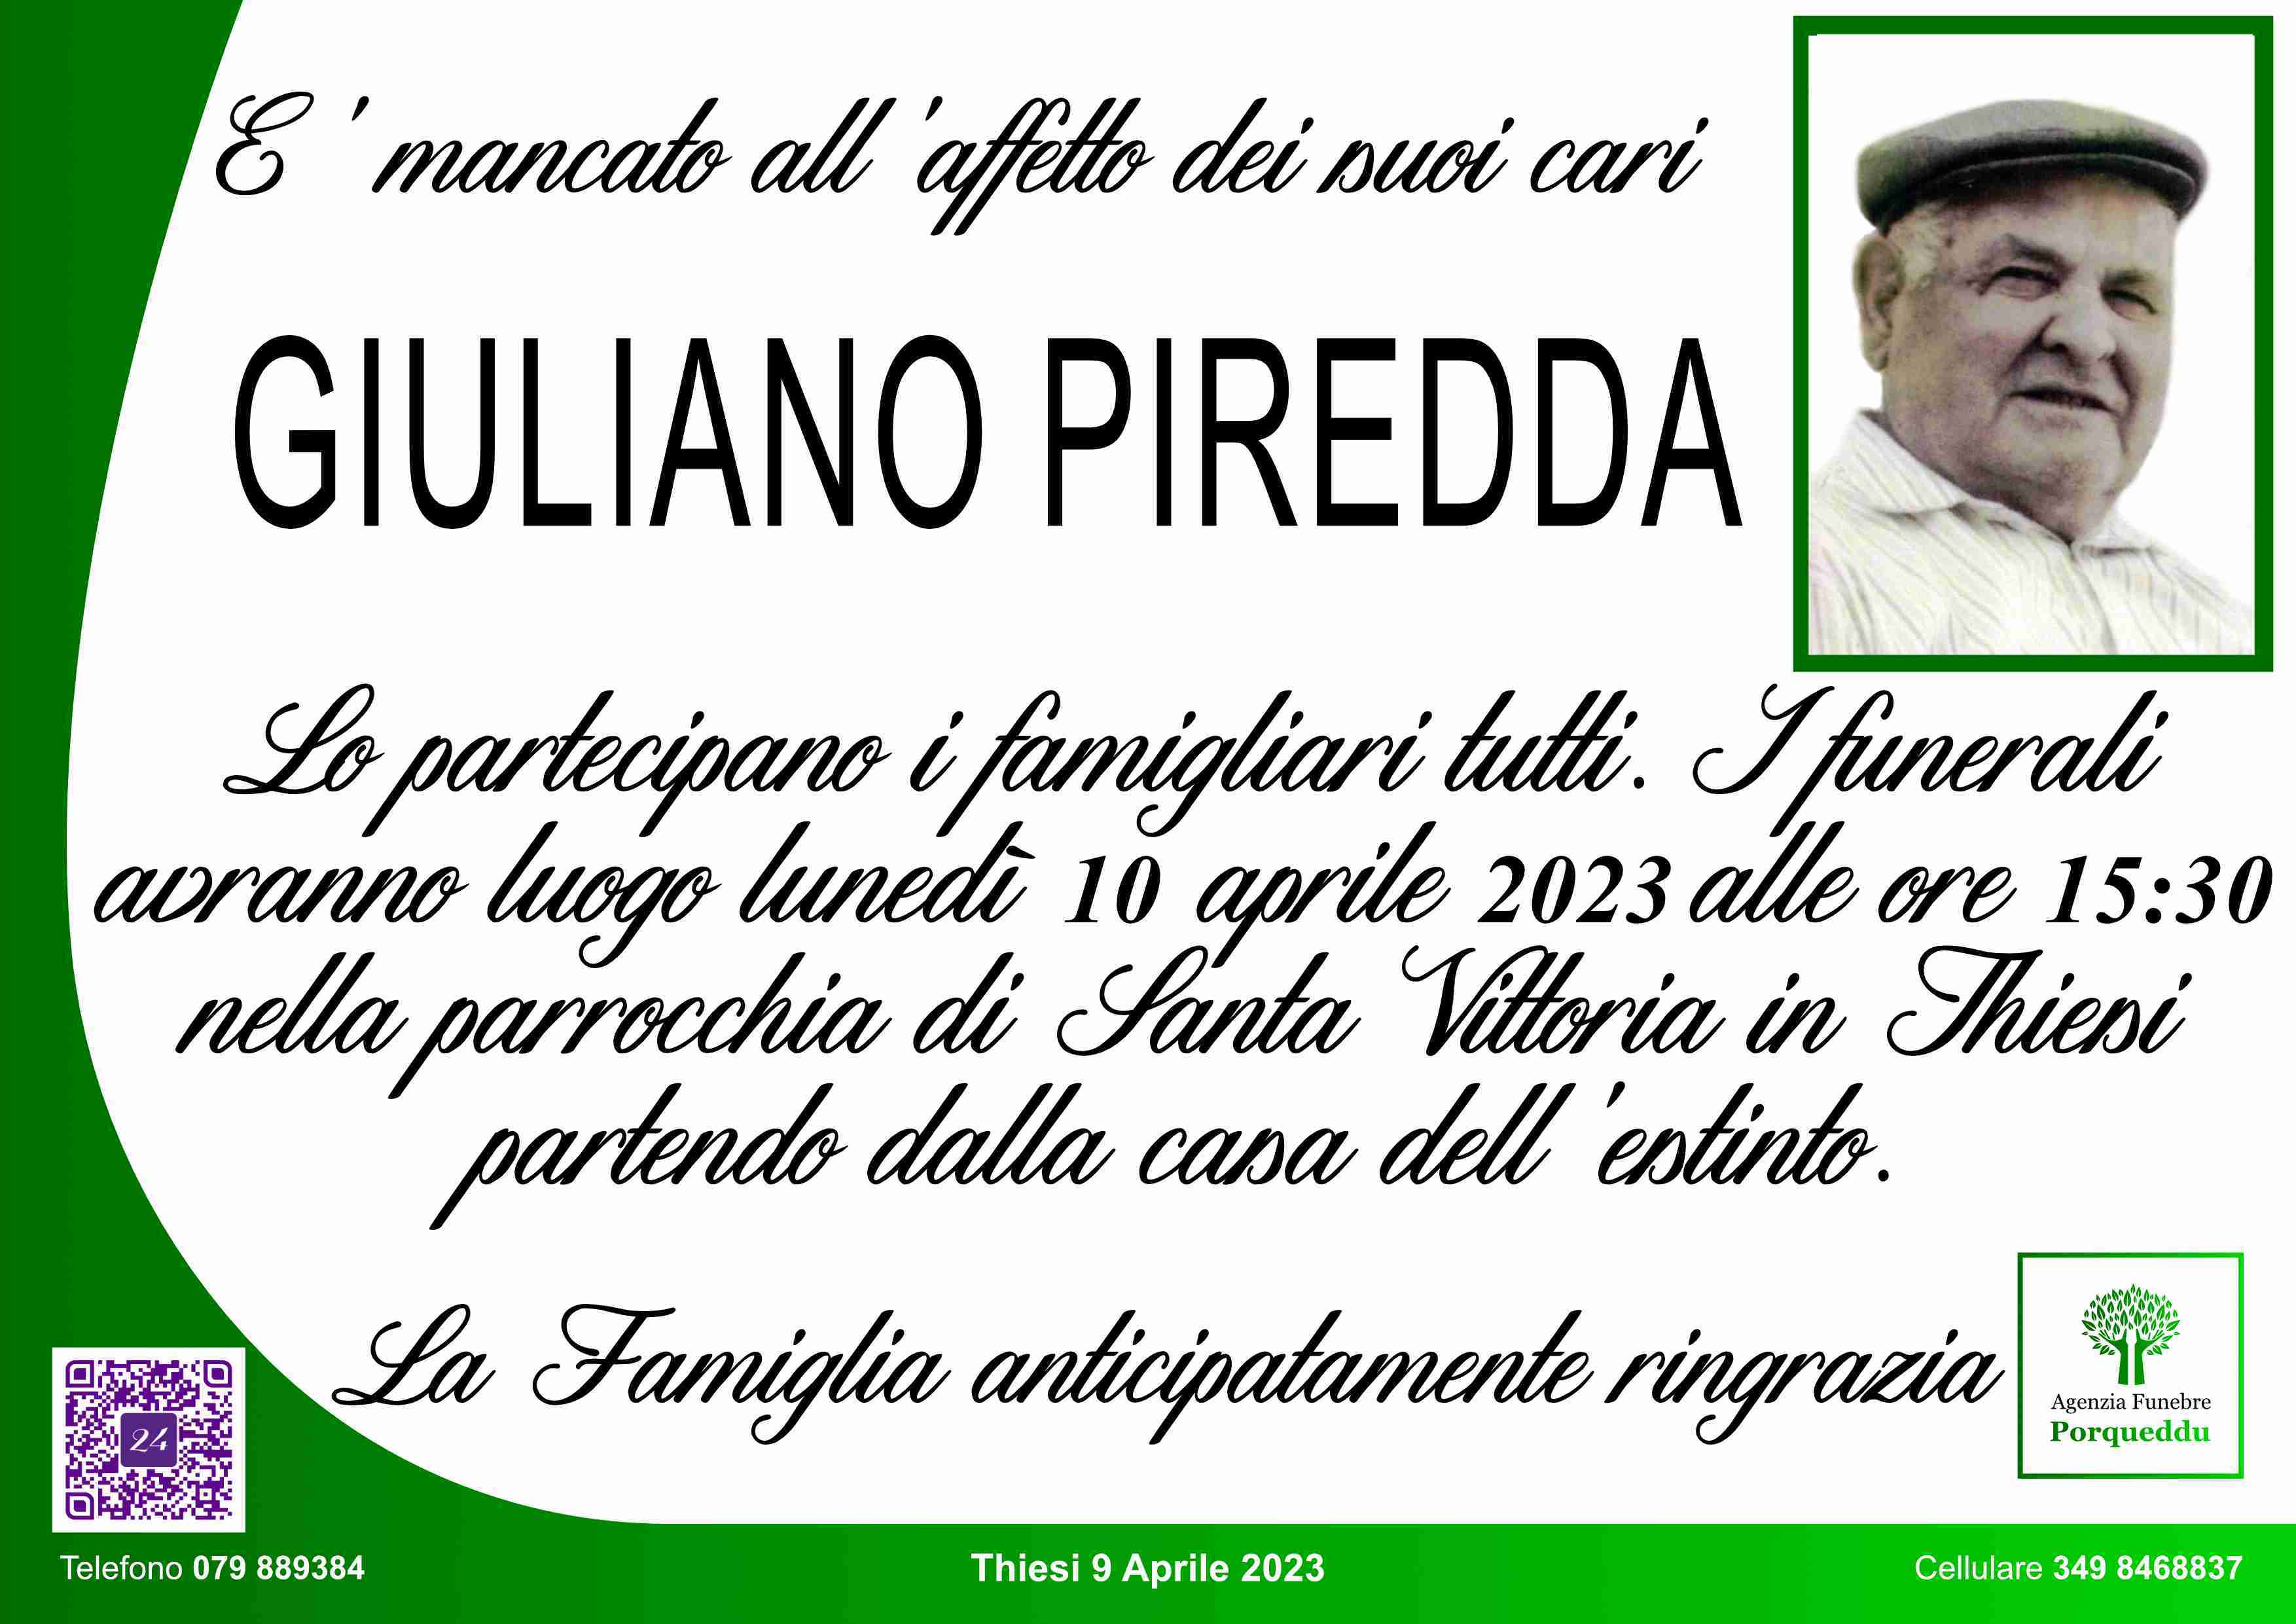 Giuliano Piredda